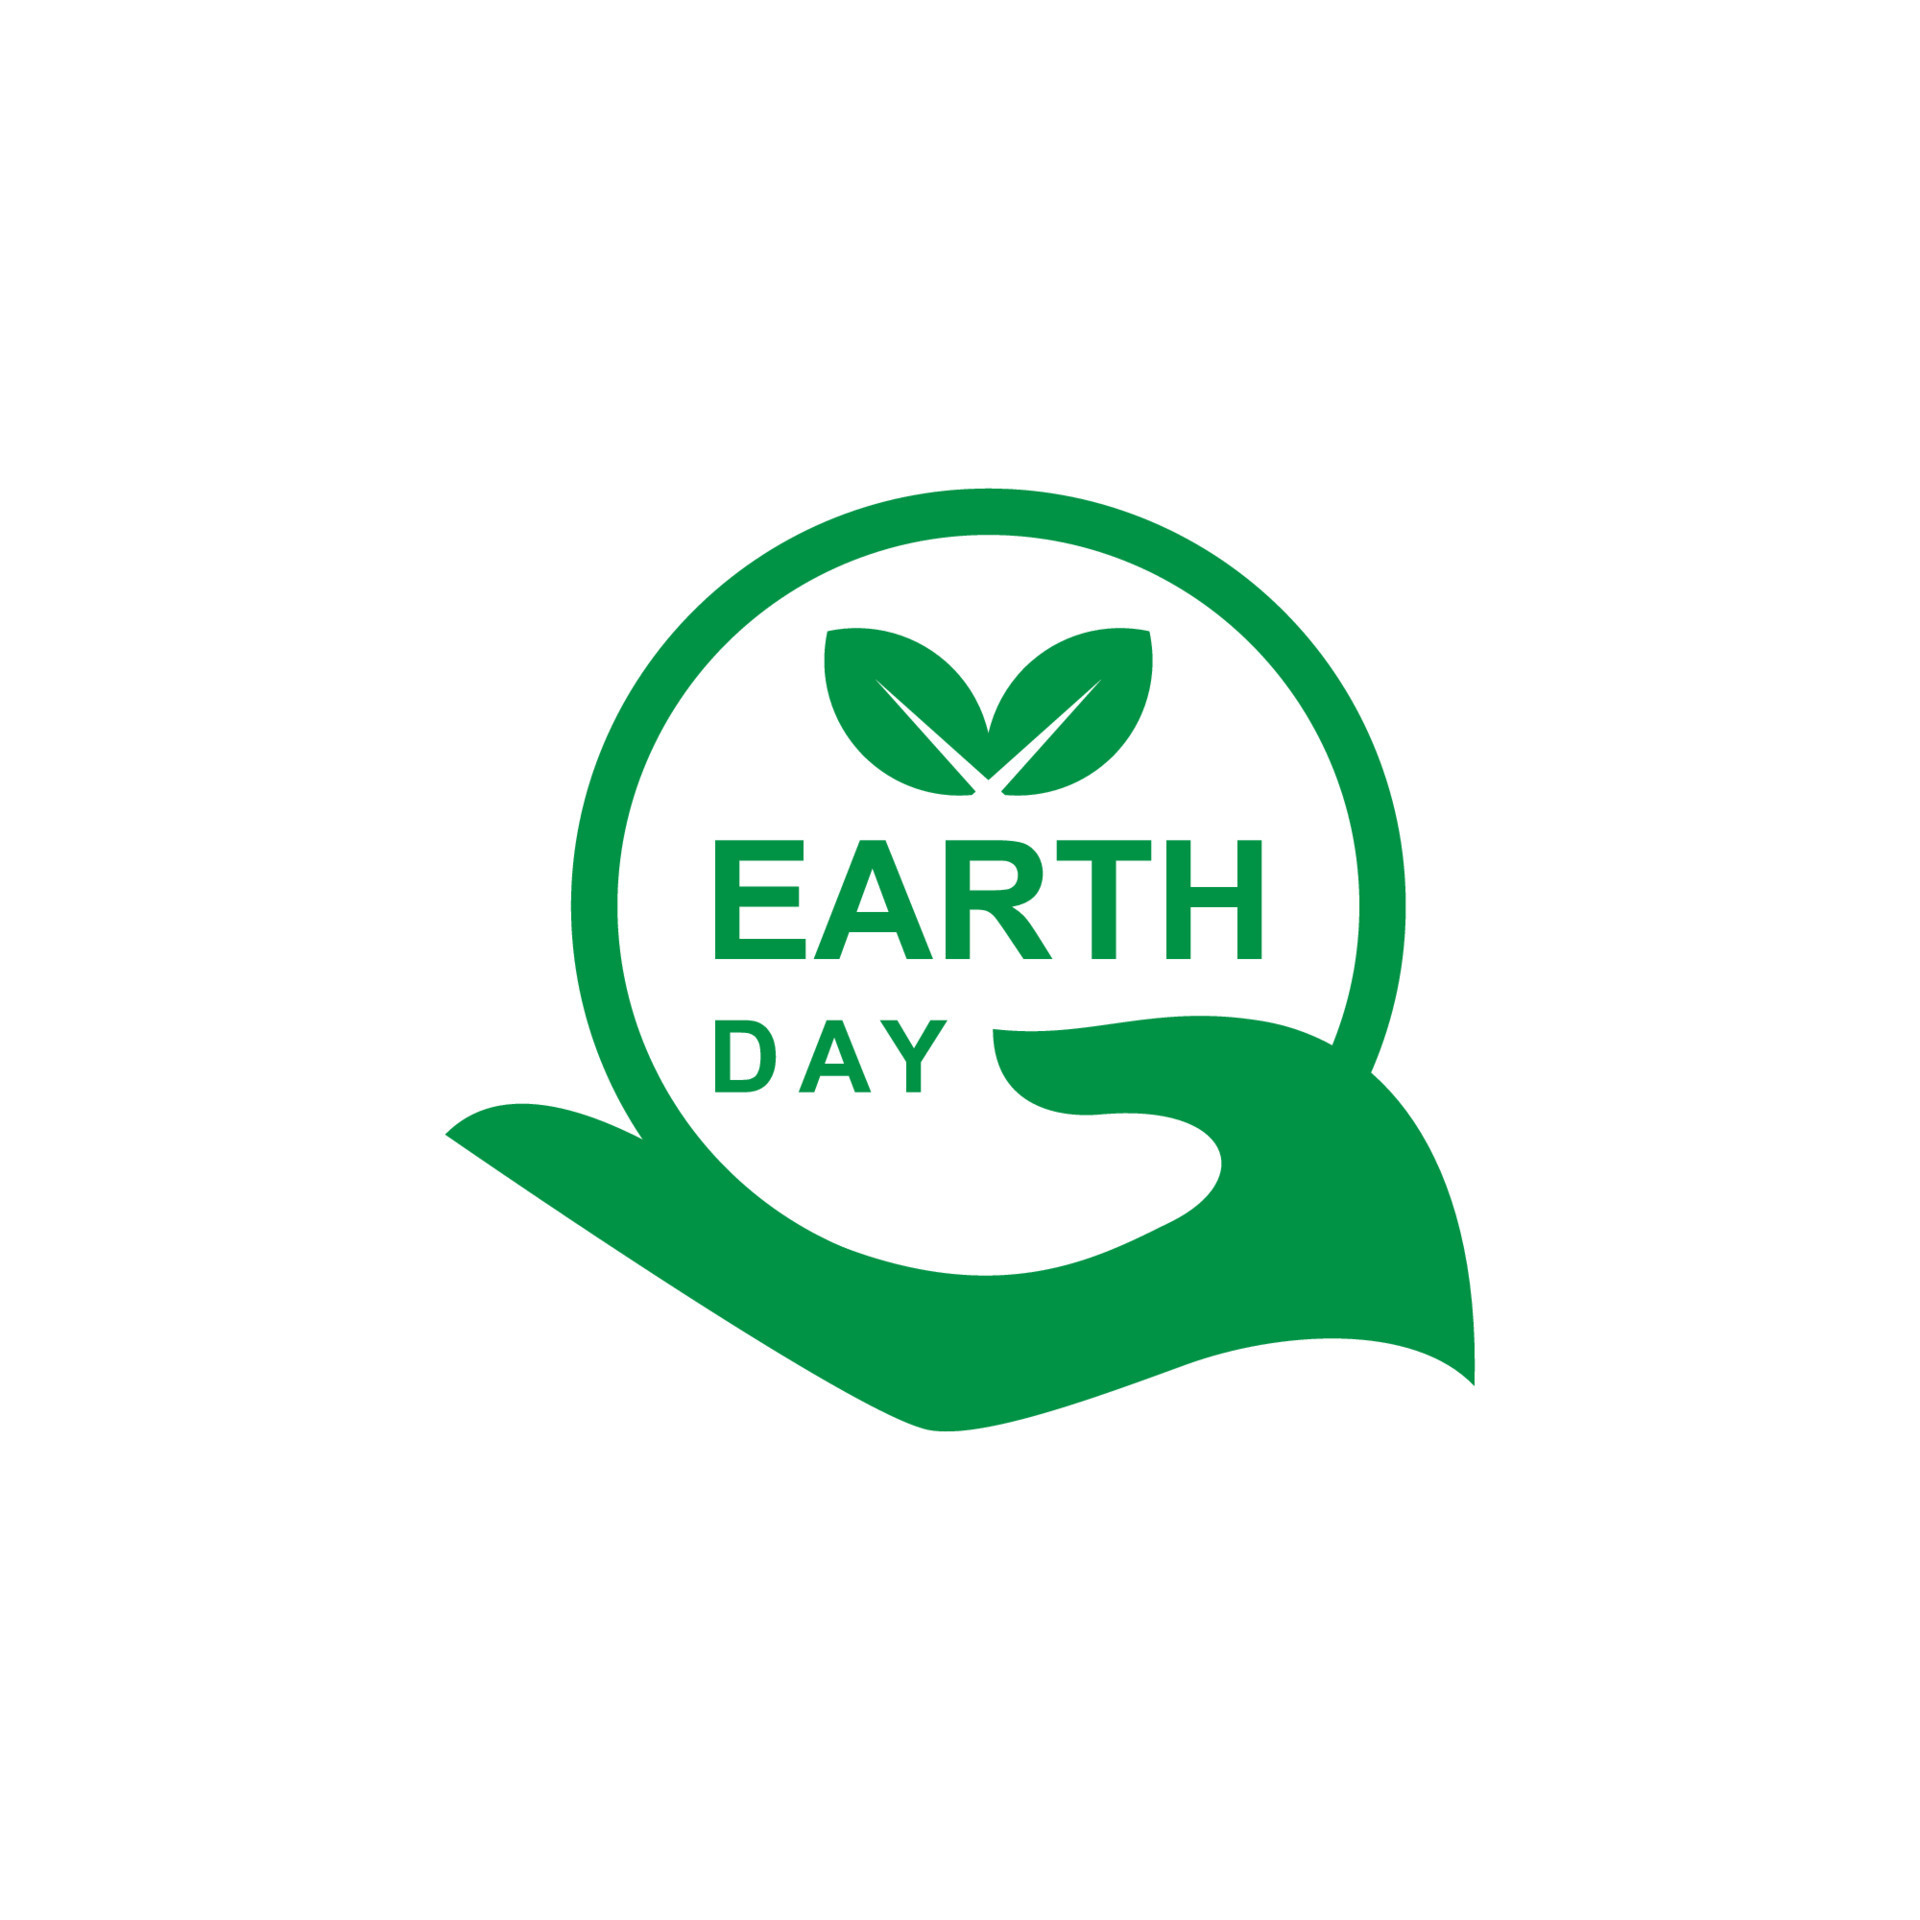 Premium Vector | Environment logo design